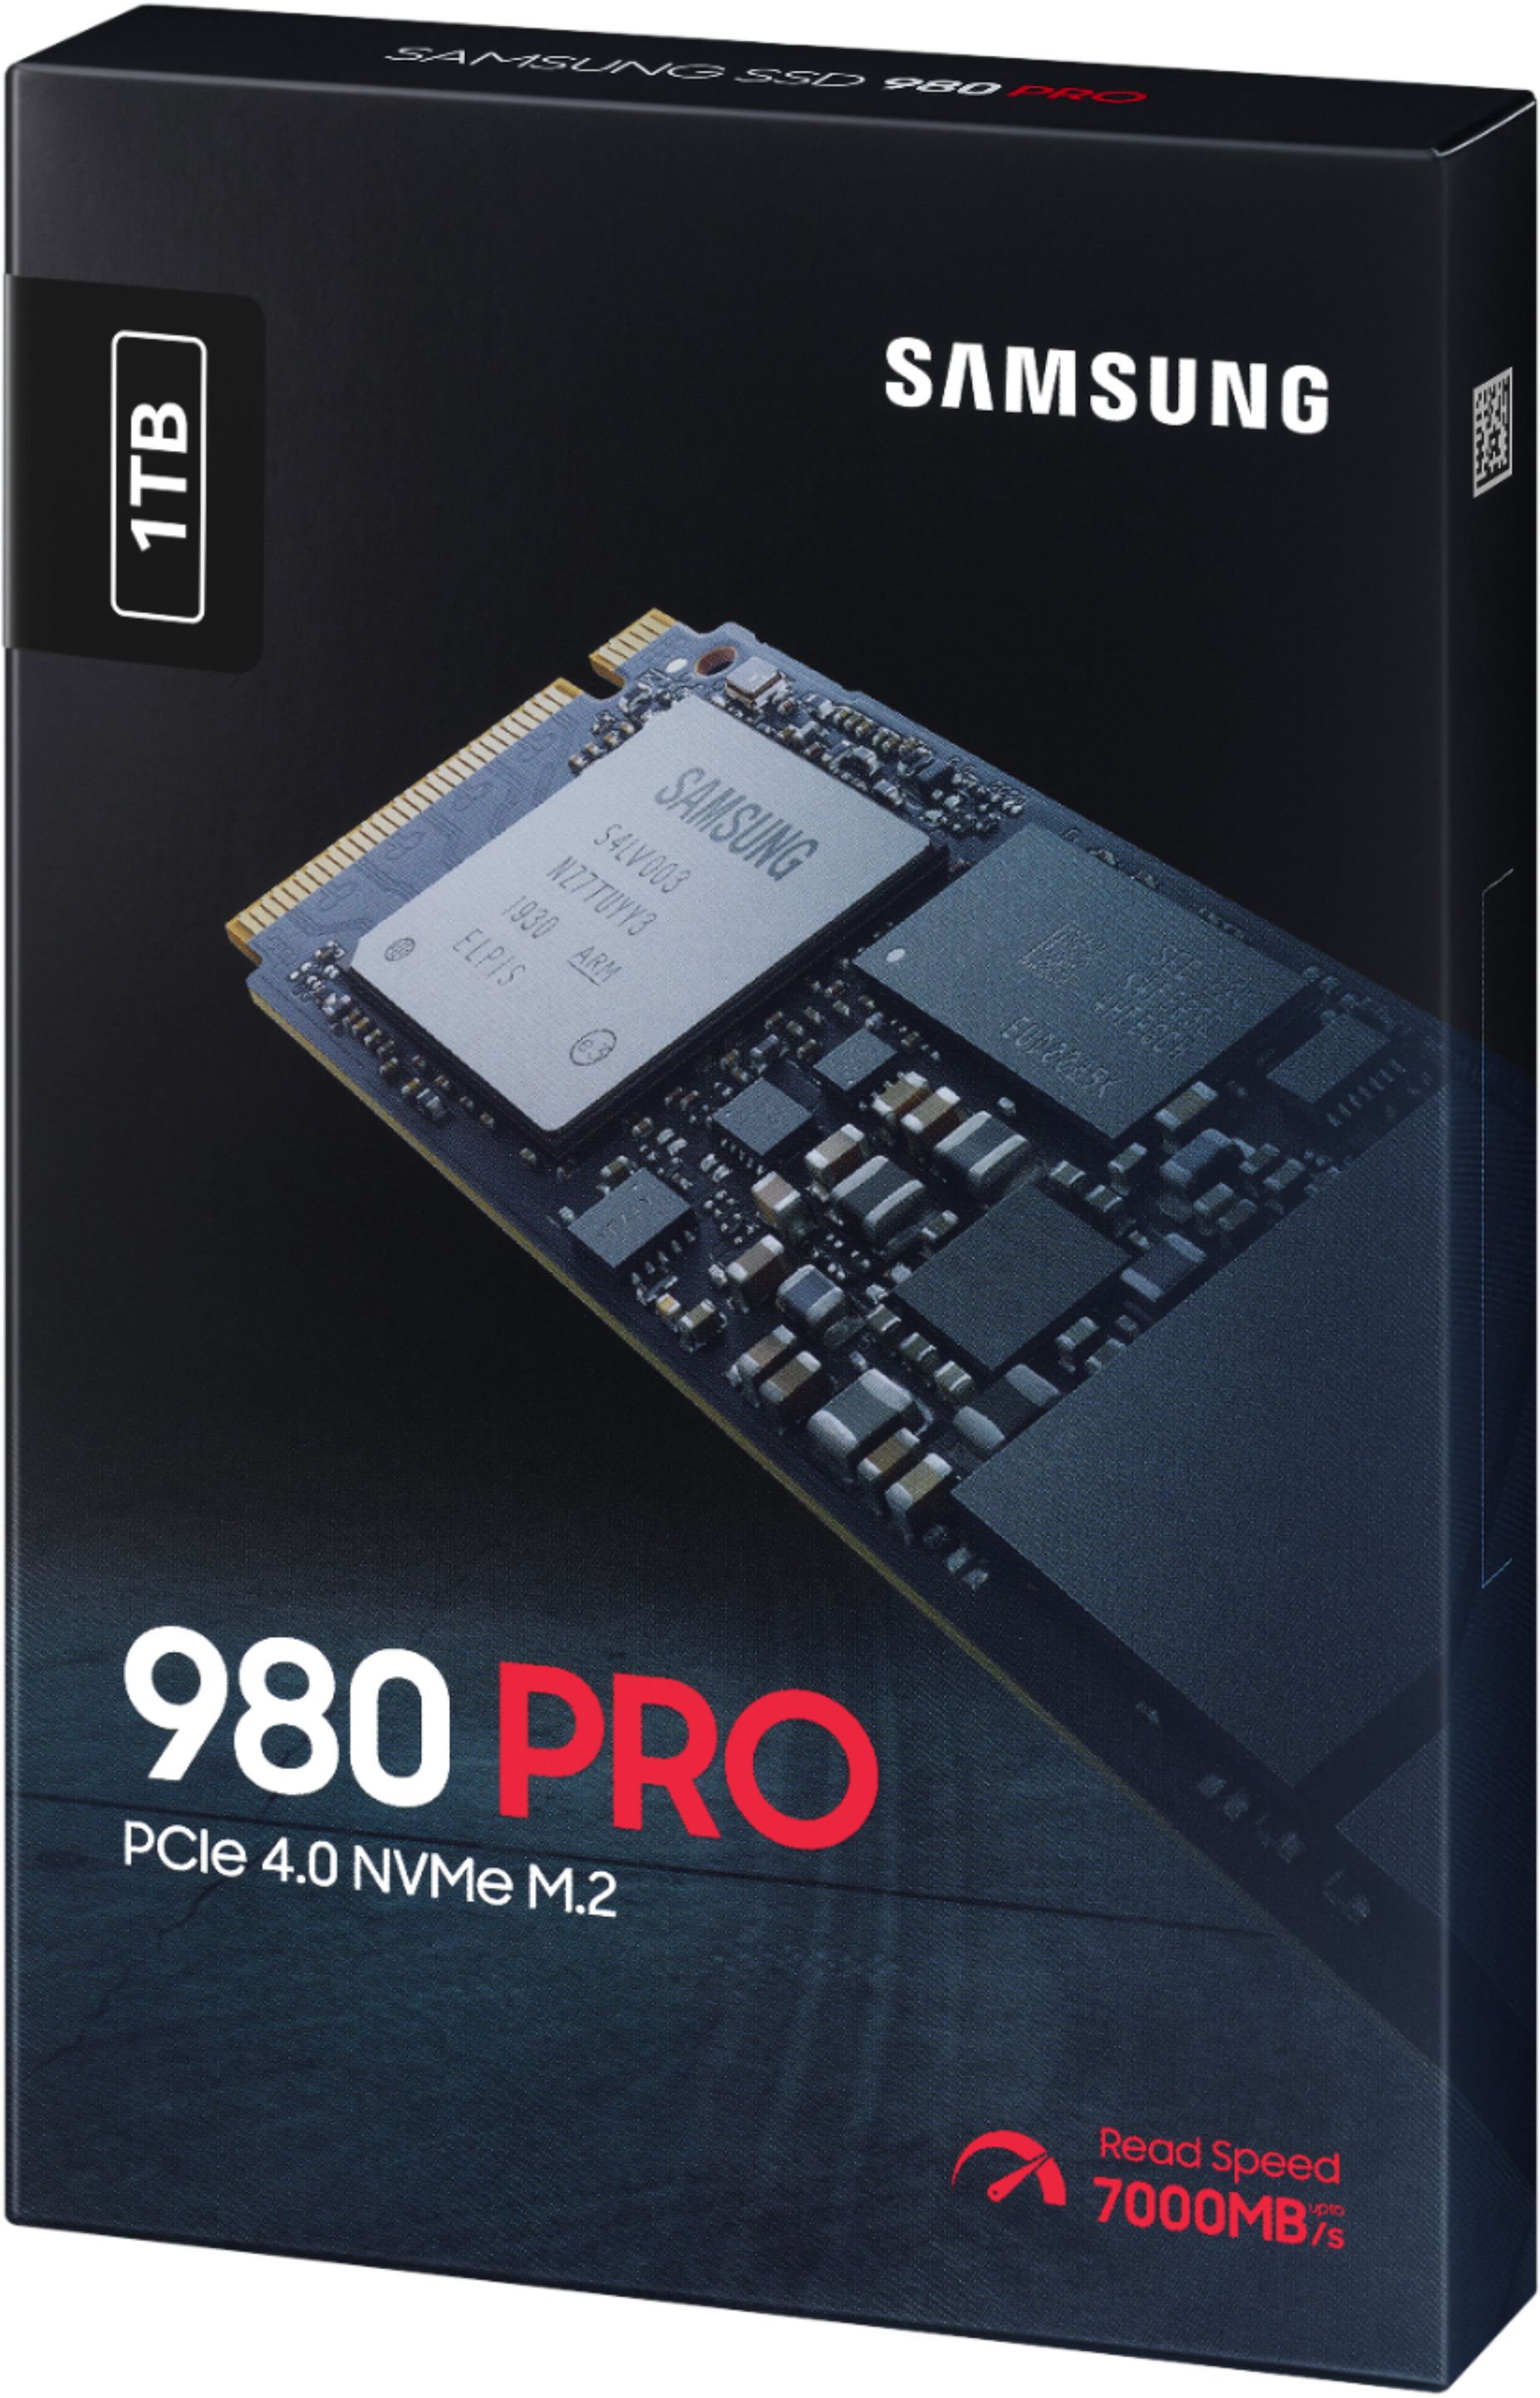 Brig chaos minus Samsung 980 PRO 1TB Internal Gaming SSD PCIe Gen 4 x4 NVMe MZ-V8P1T0B/AM -  Best Buy